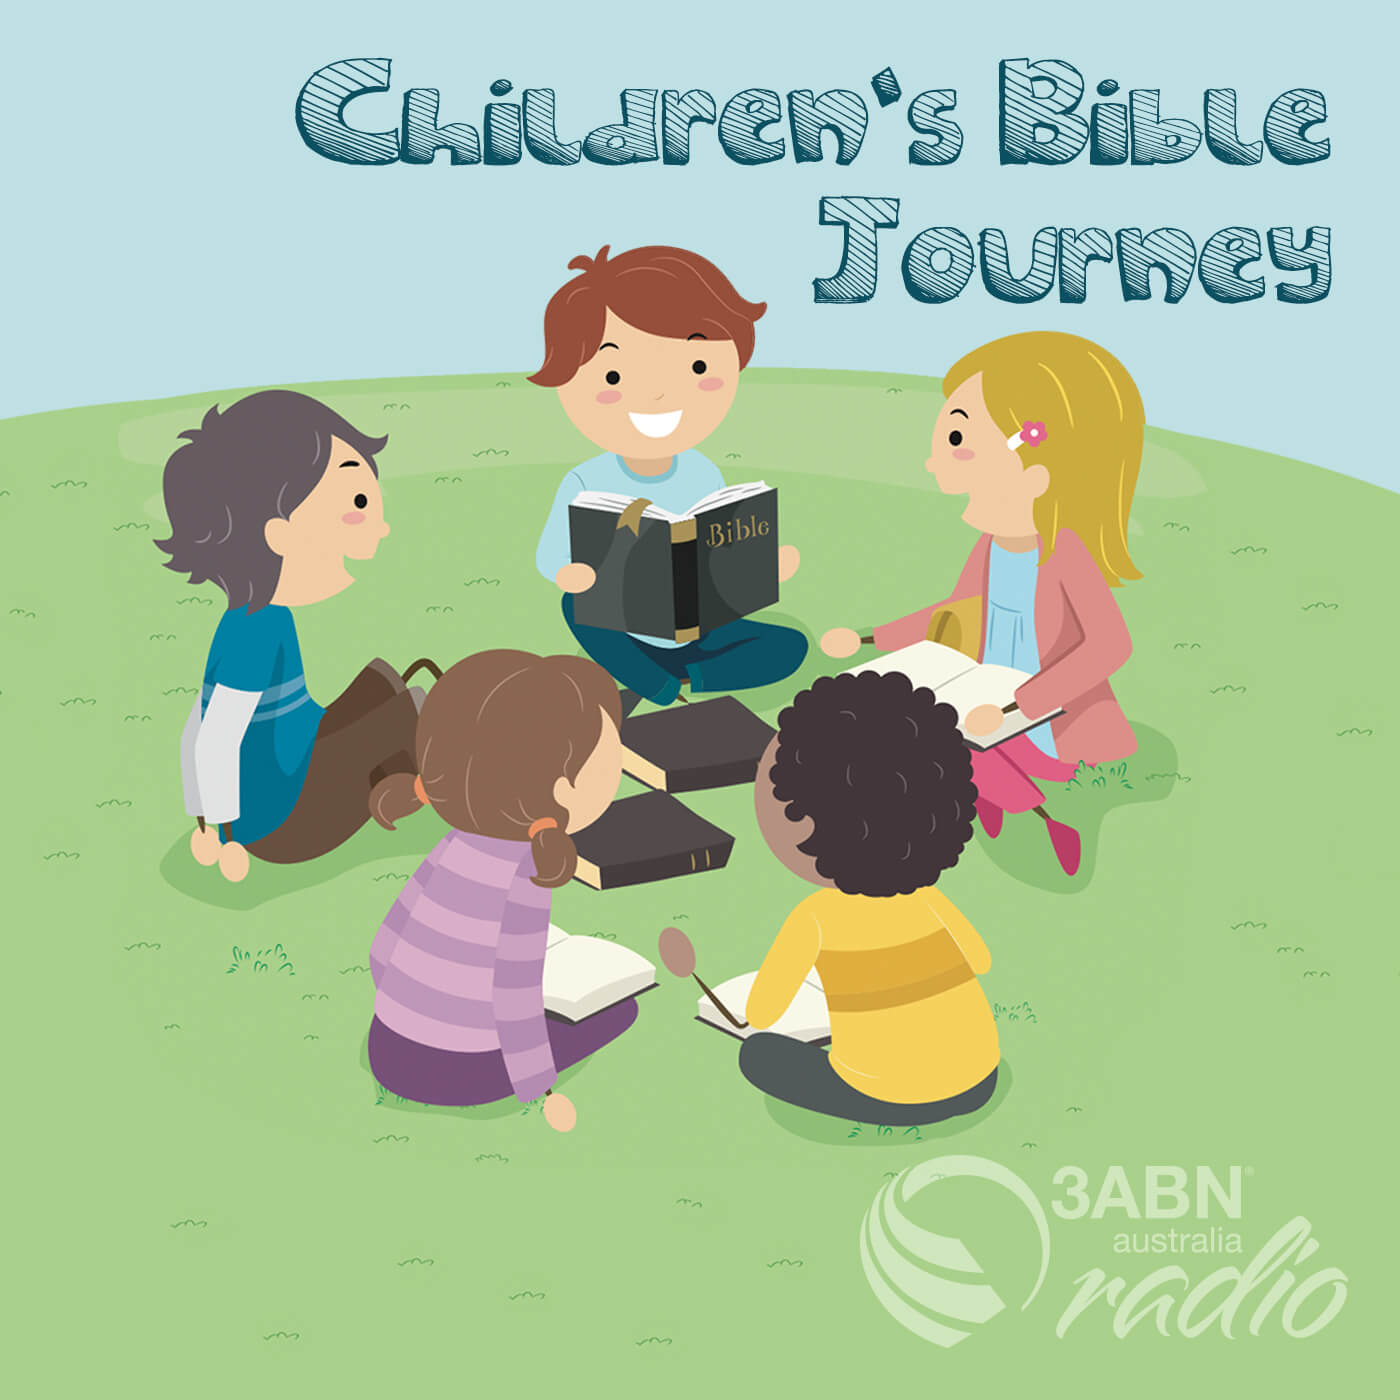 Children's Bible Journey - 2121